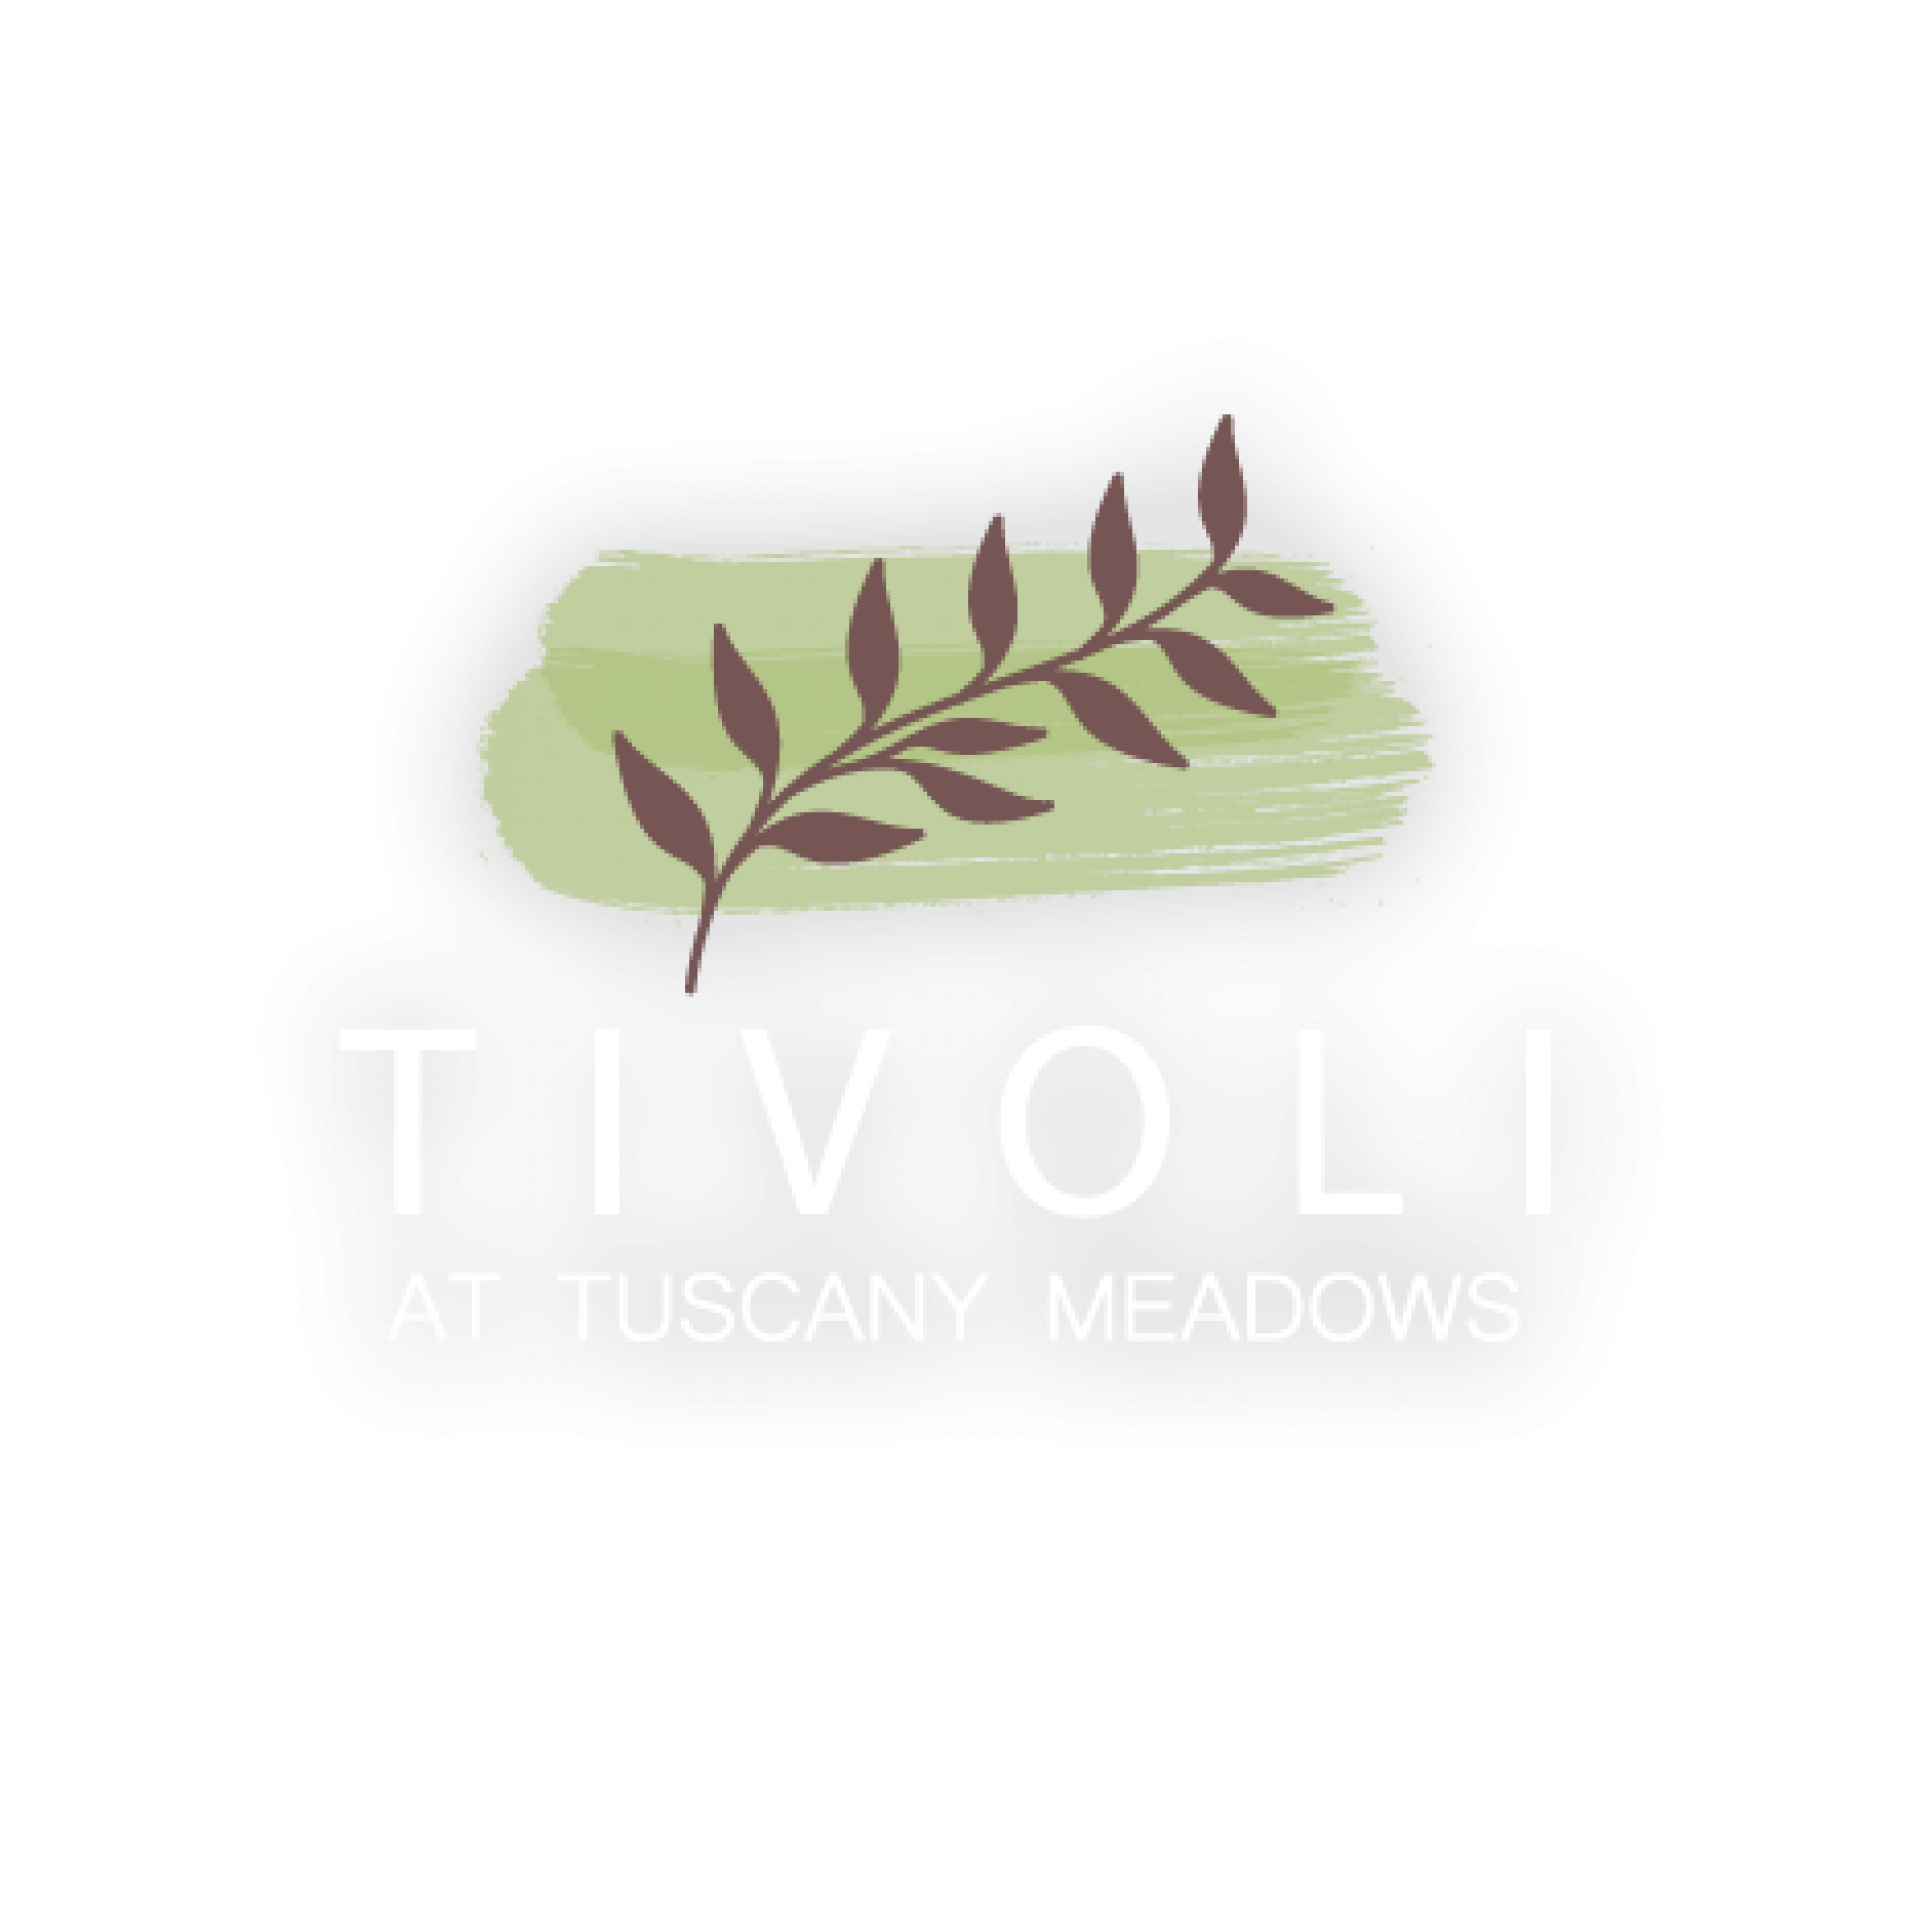 Tivoli new homes for sale logo